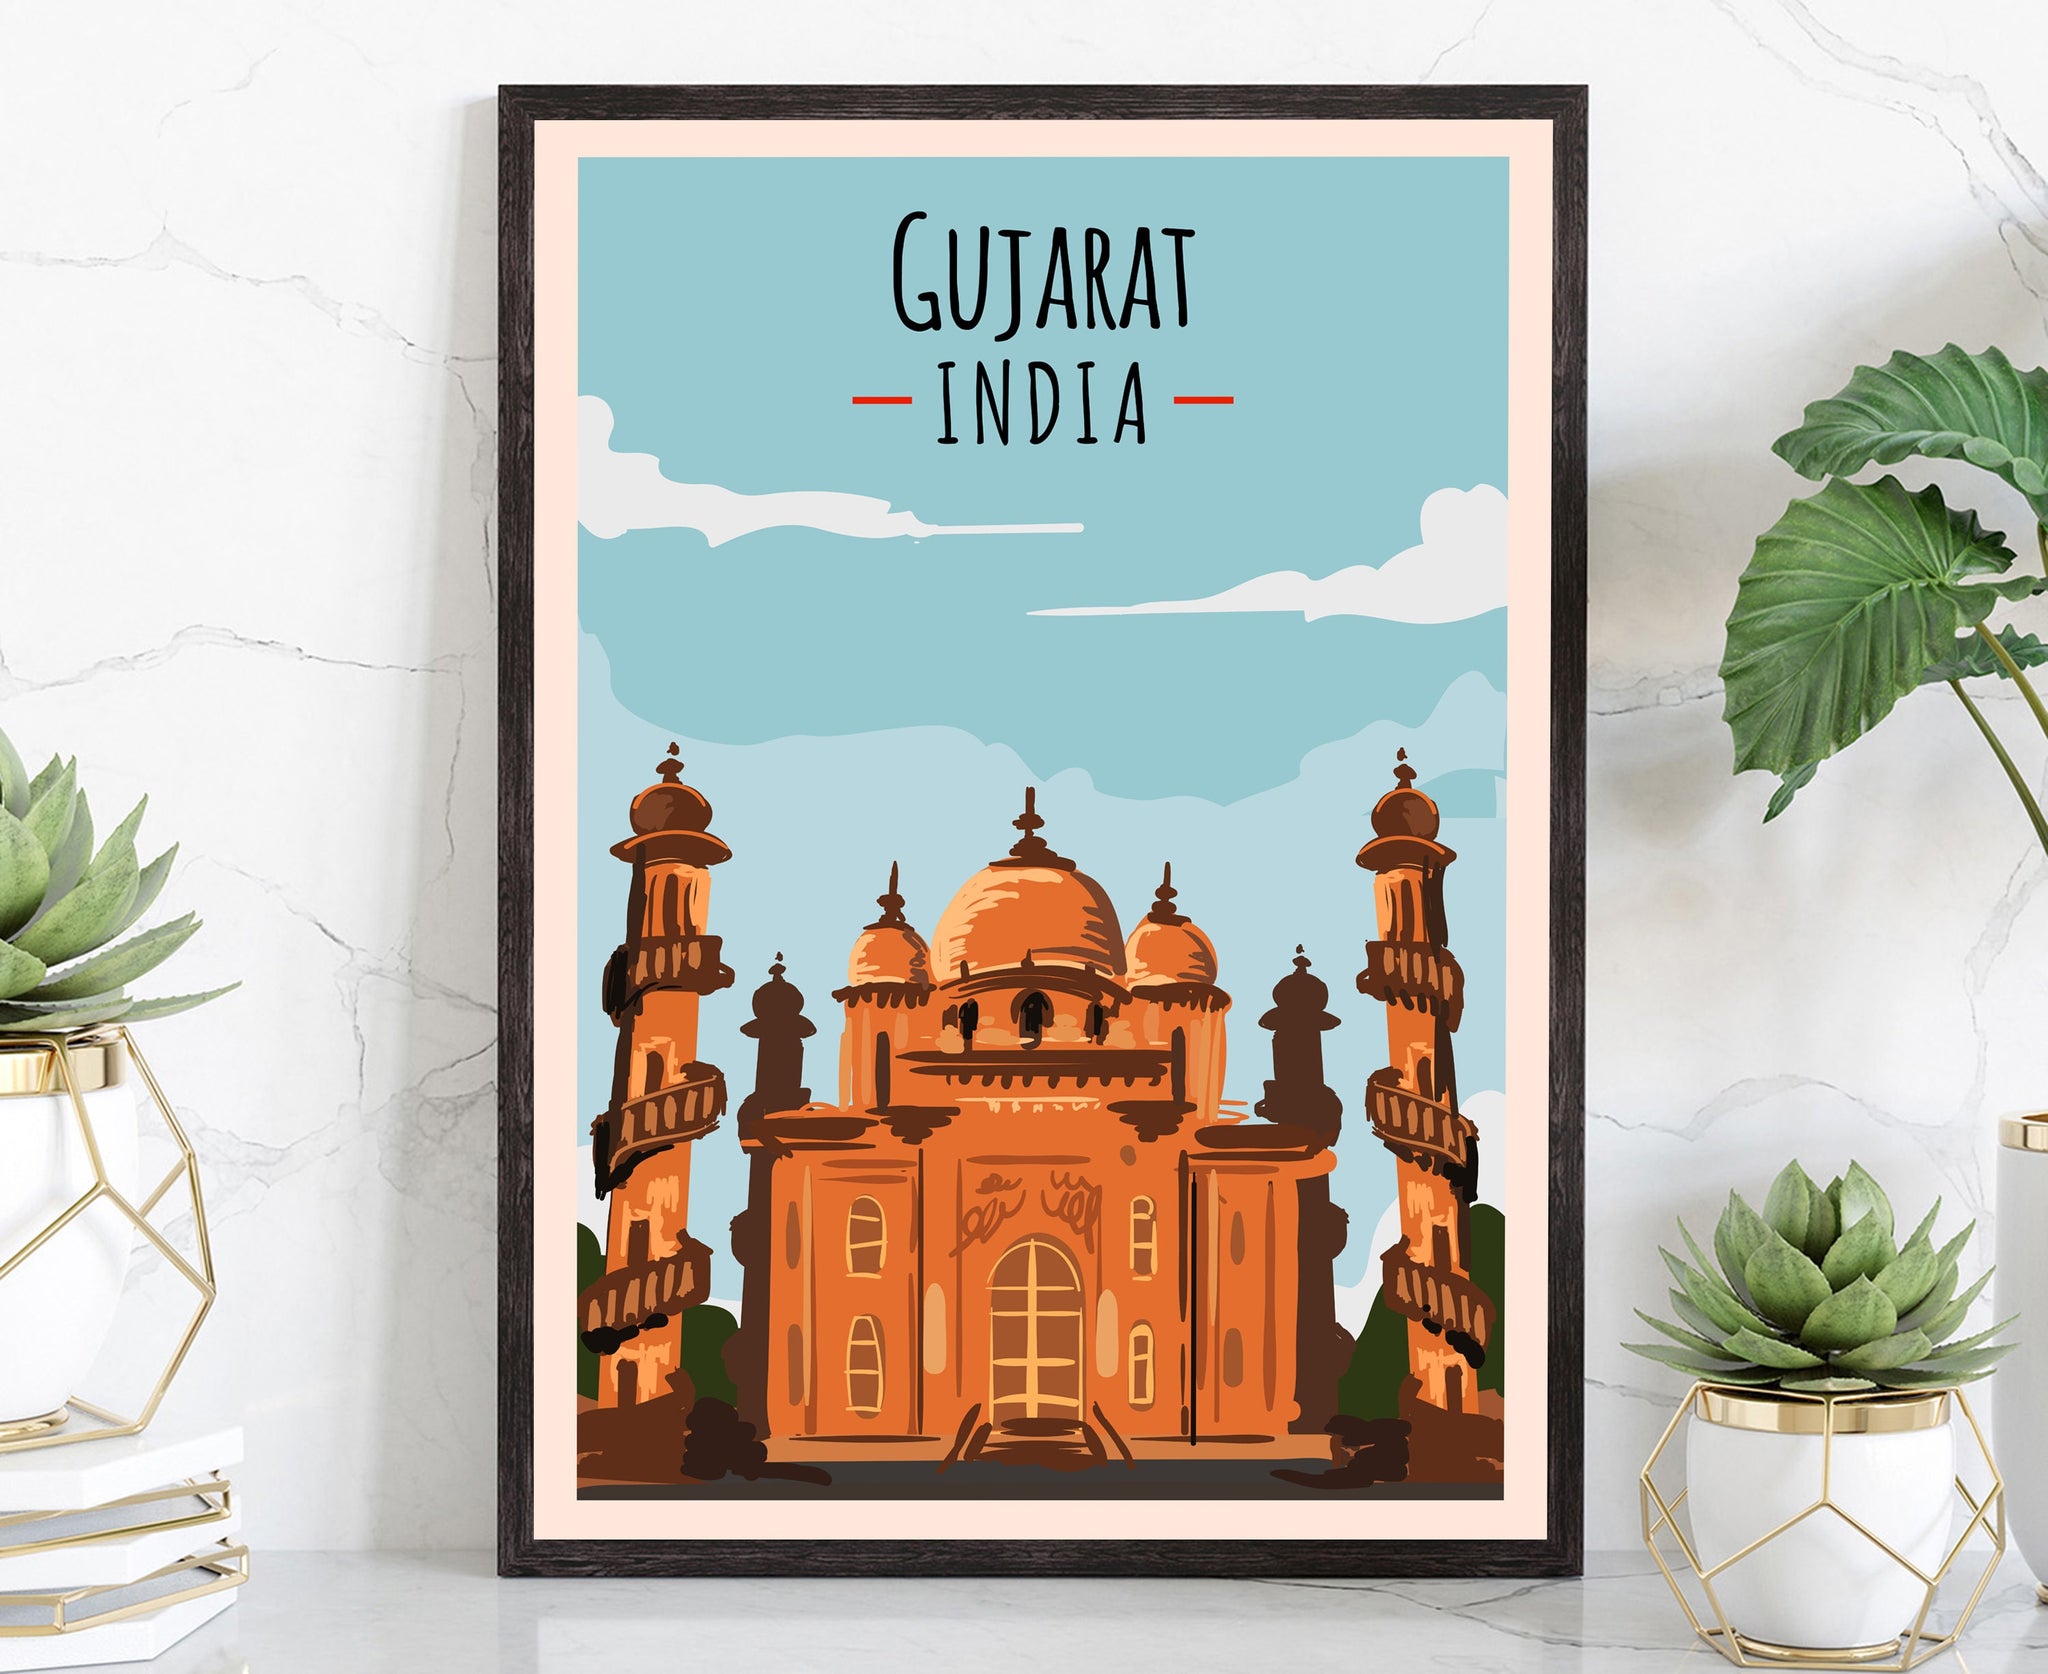 INDIA GUJARAT travel poster, India Gujarat poster wall art, Gujarat cityscape poster, Landmark Poster, Home wall art, Office wall decoration